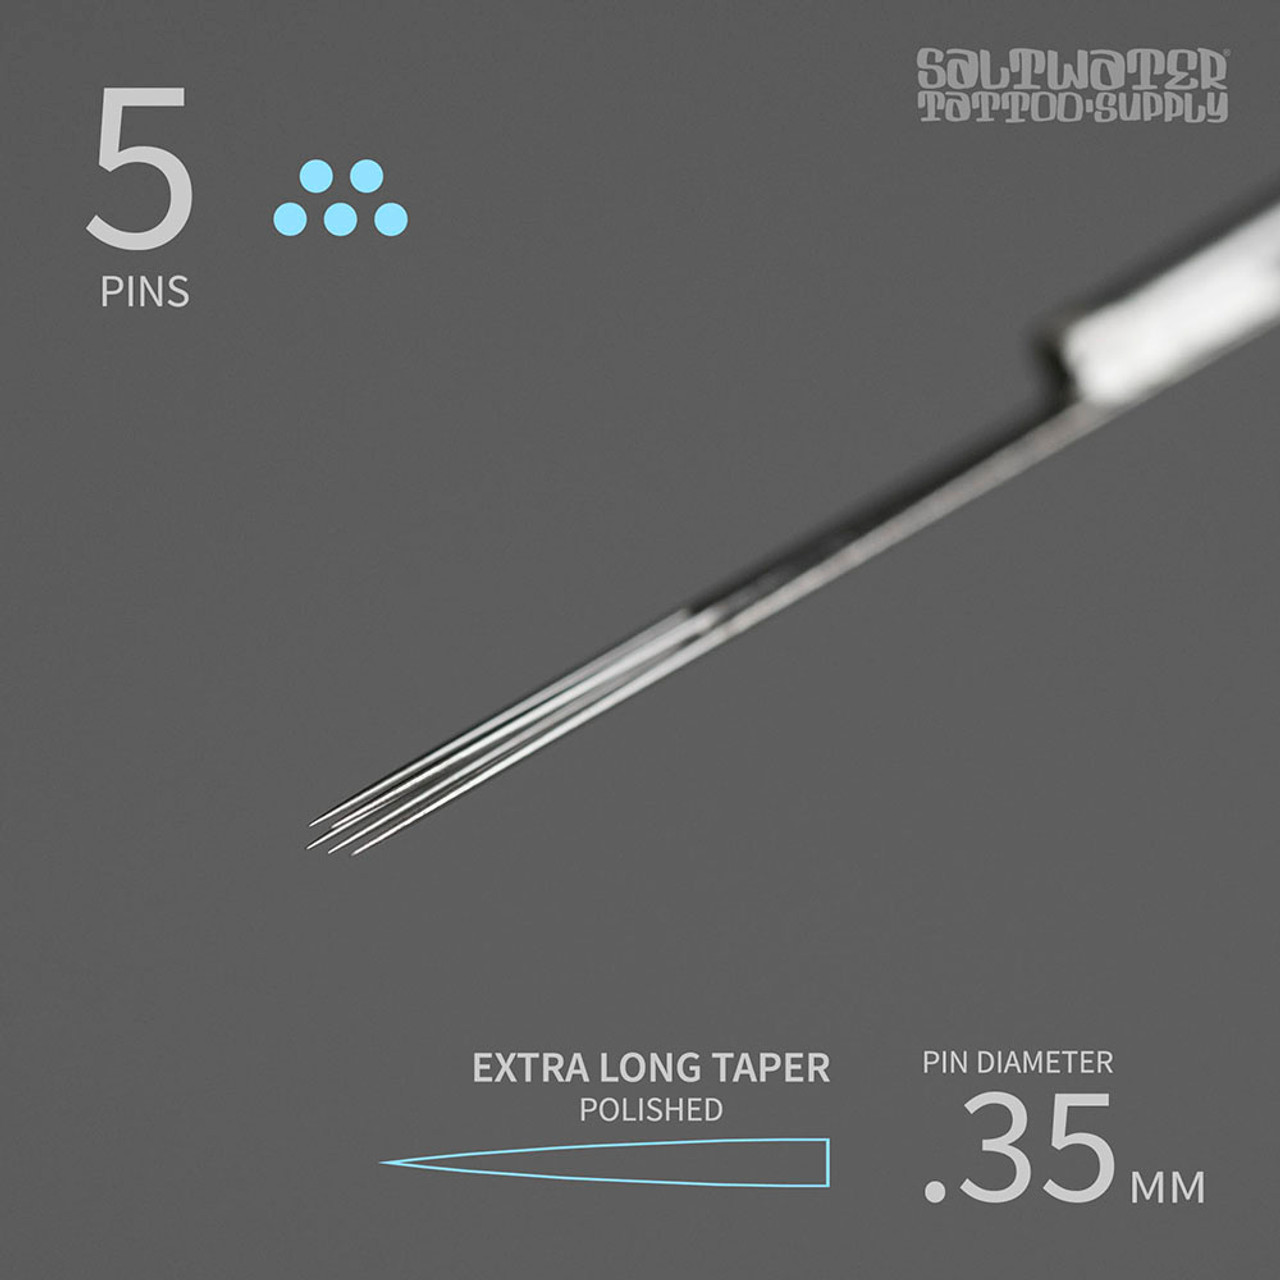 Long & Extra Long Needles